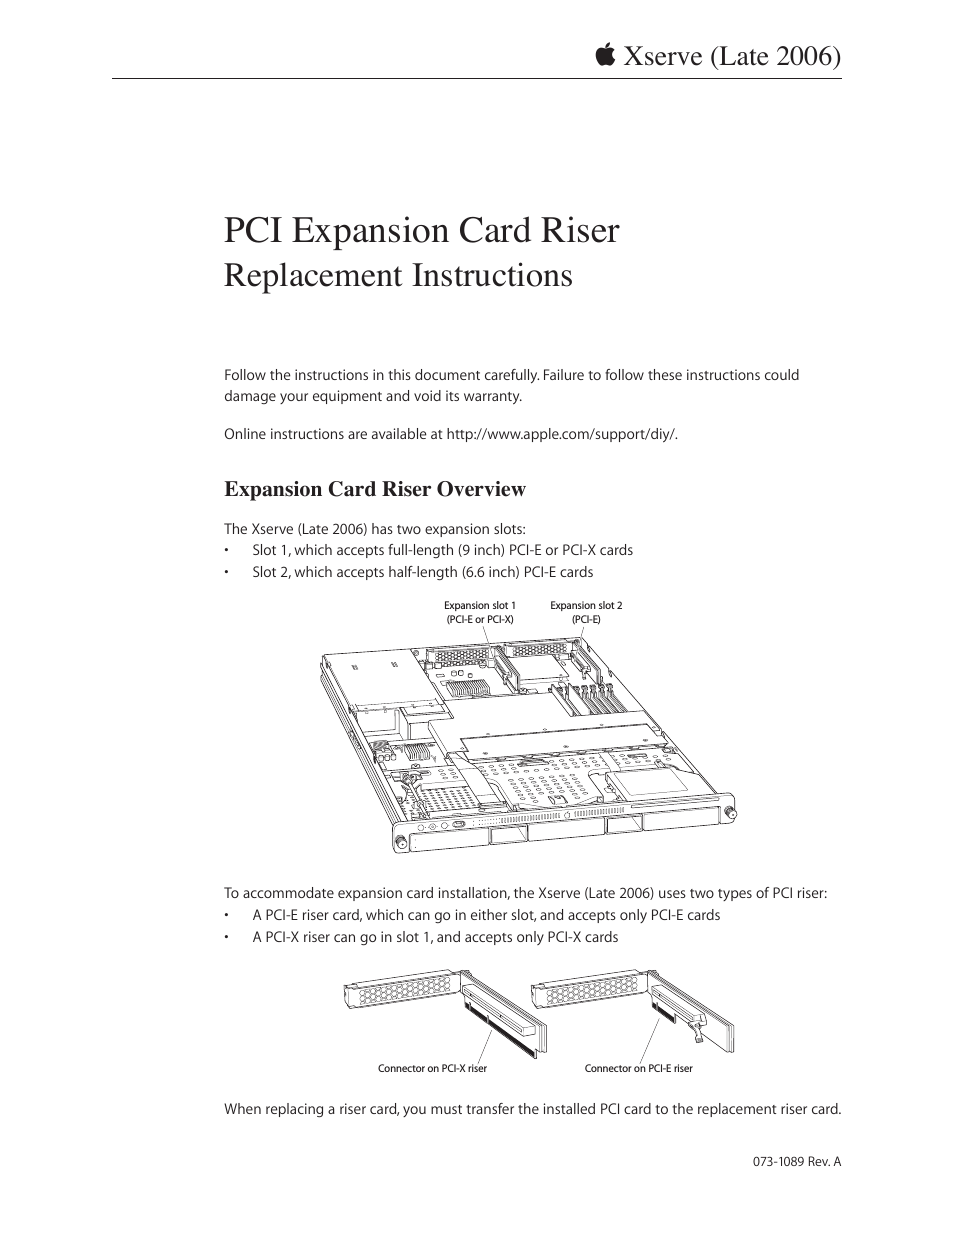 Xserve Intel (Late 2006) DIY Procedure for Expansion Card Riser